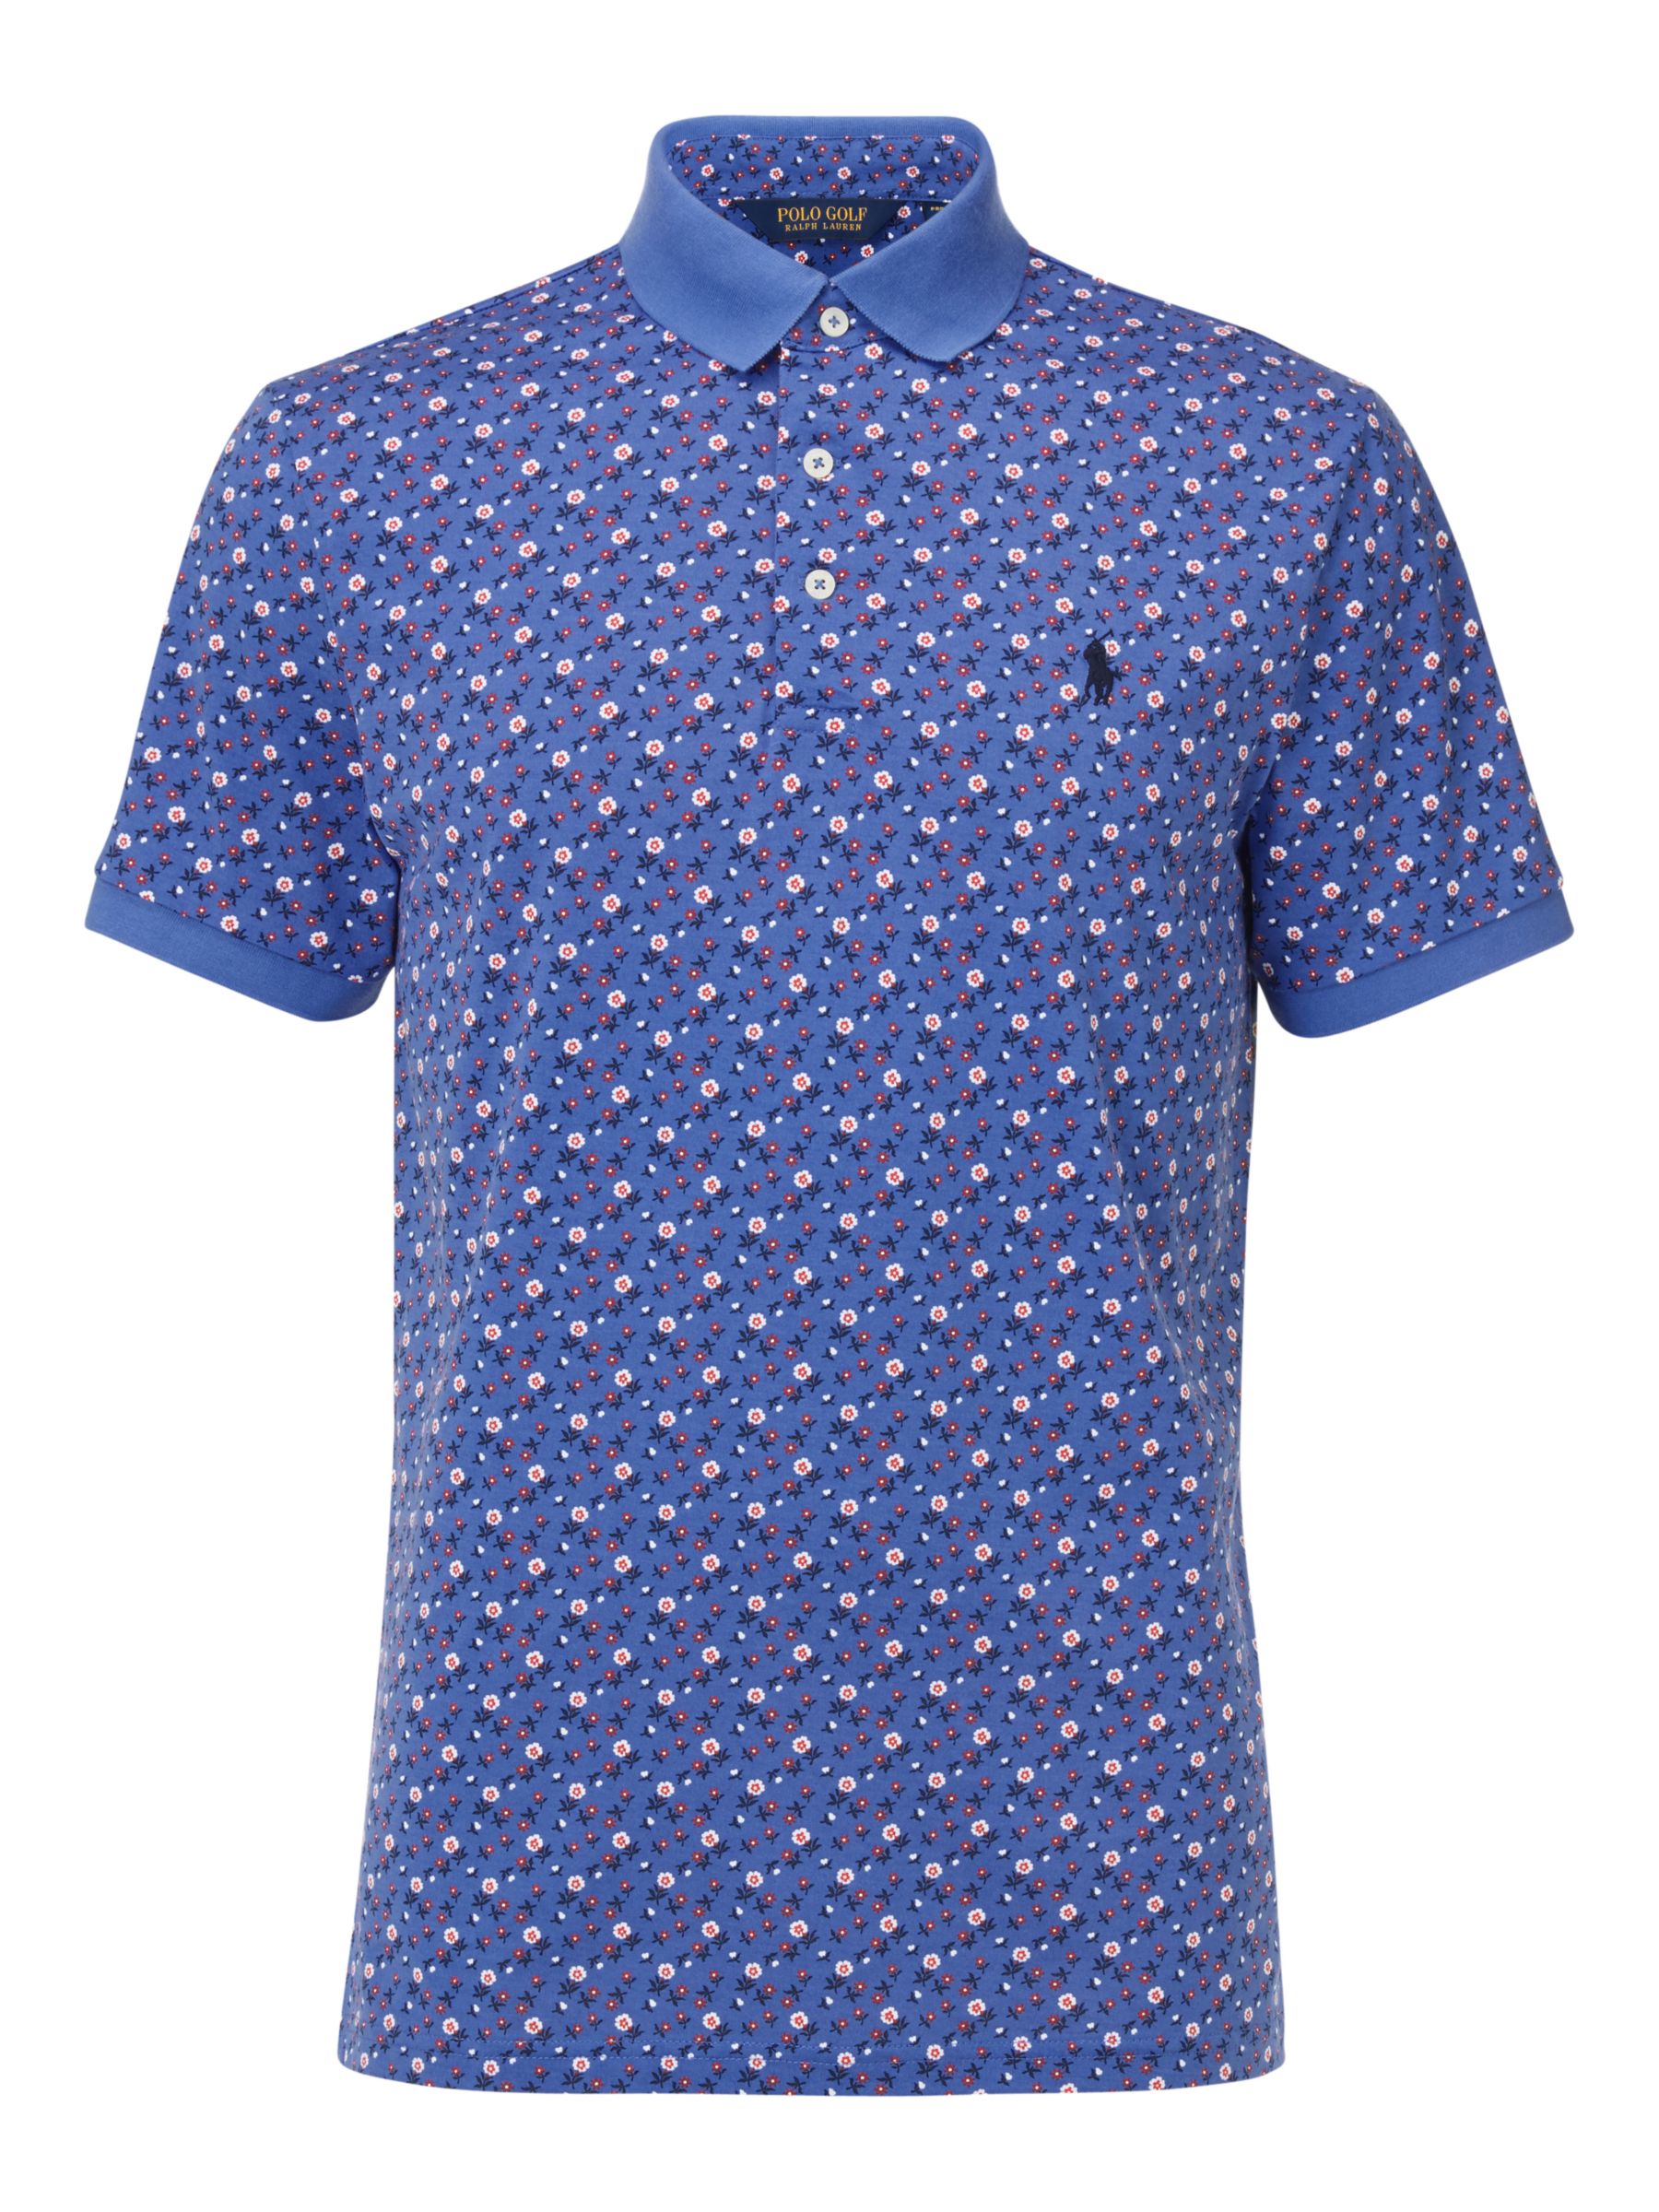 Polo Golf by Ralph Lauren Short Sleeve Floral Print Polo Shirt, Blue/Multi